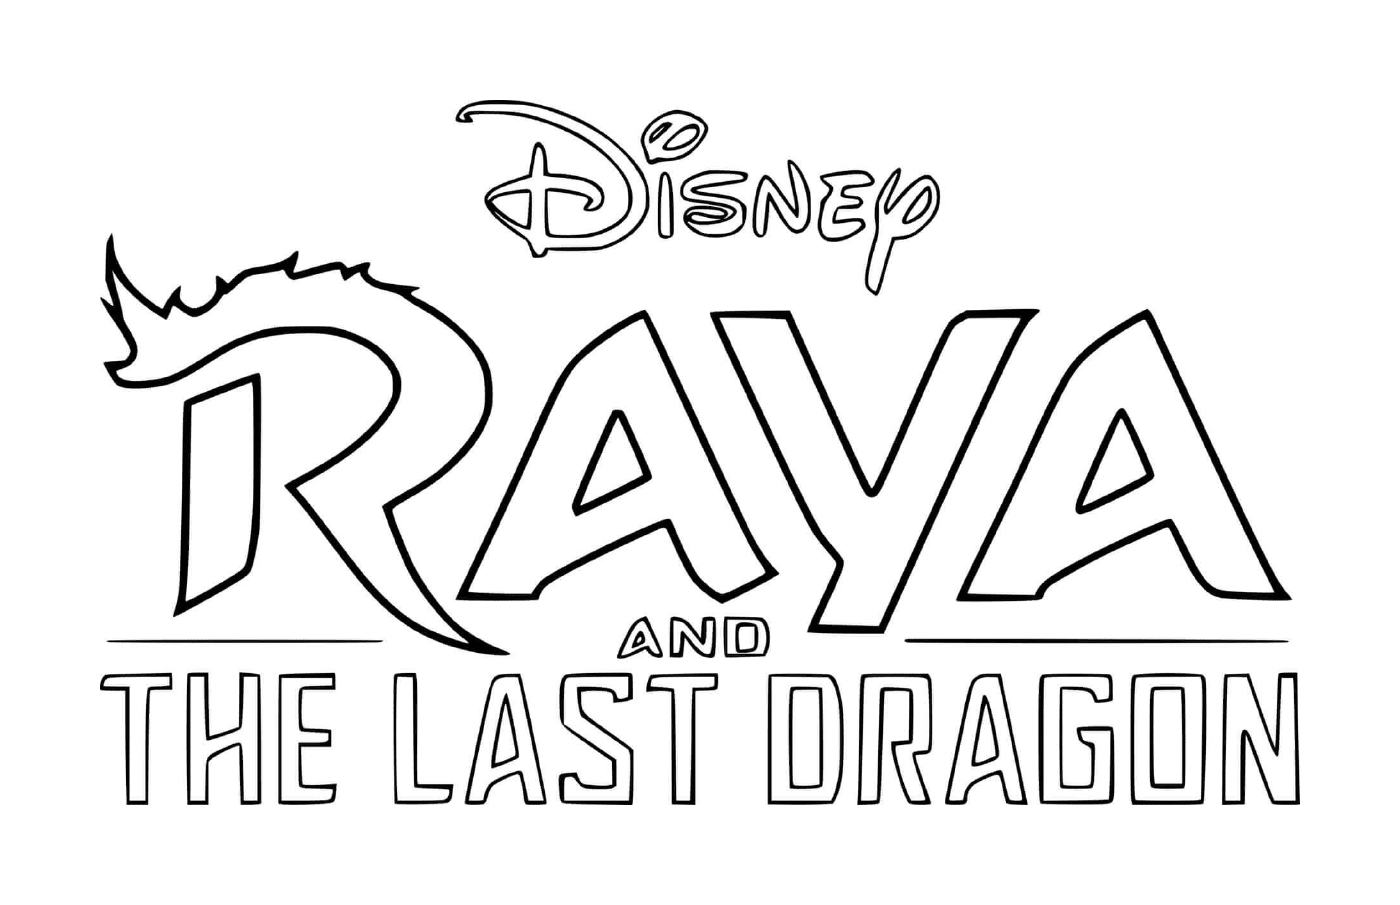 Disney Raya and the Last Dragon